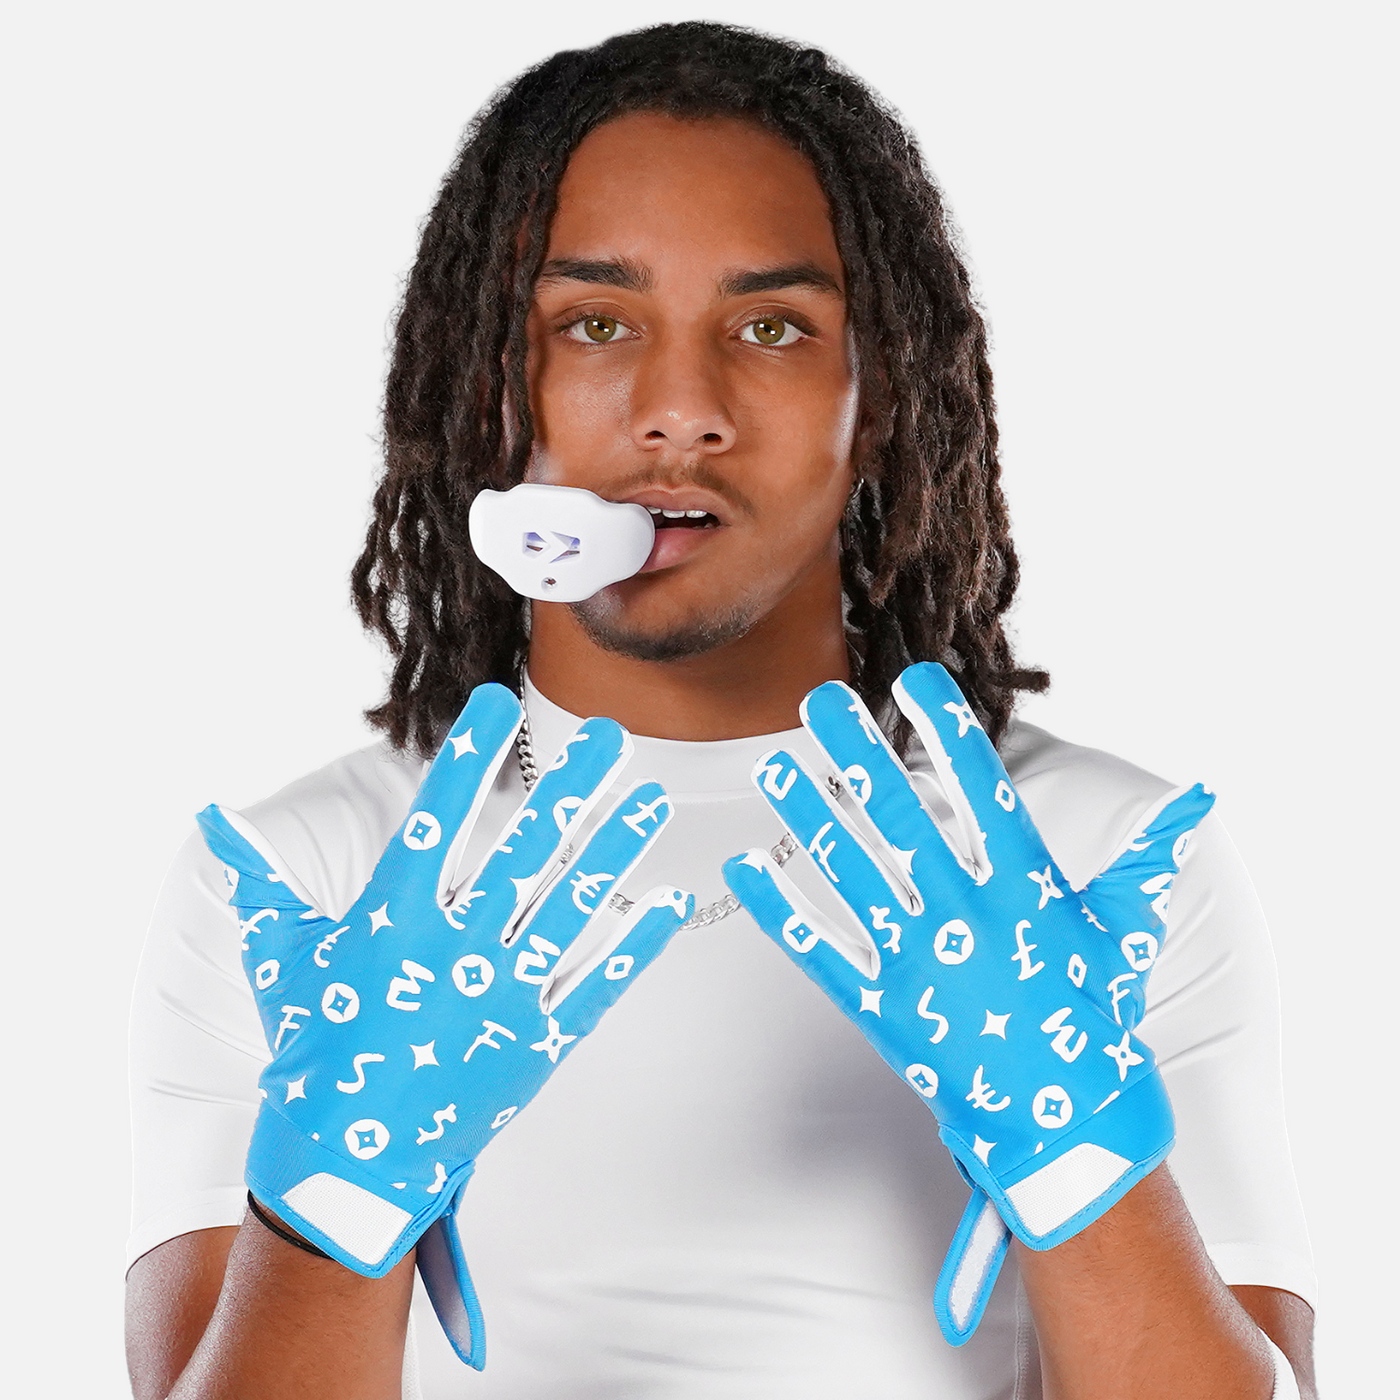 Sleefs Lavish Sky Blue Sticky Football Receiver Gloves